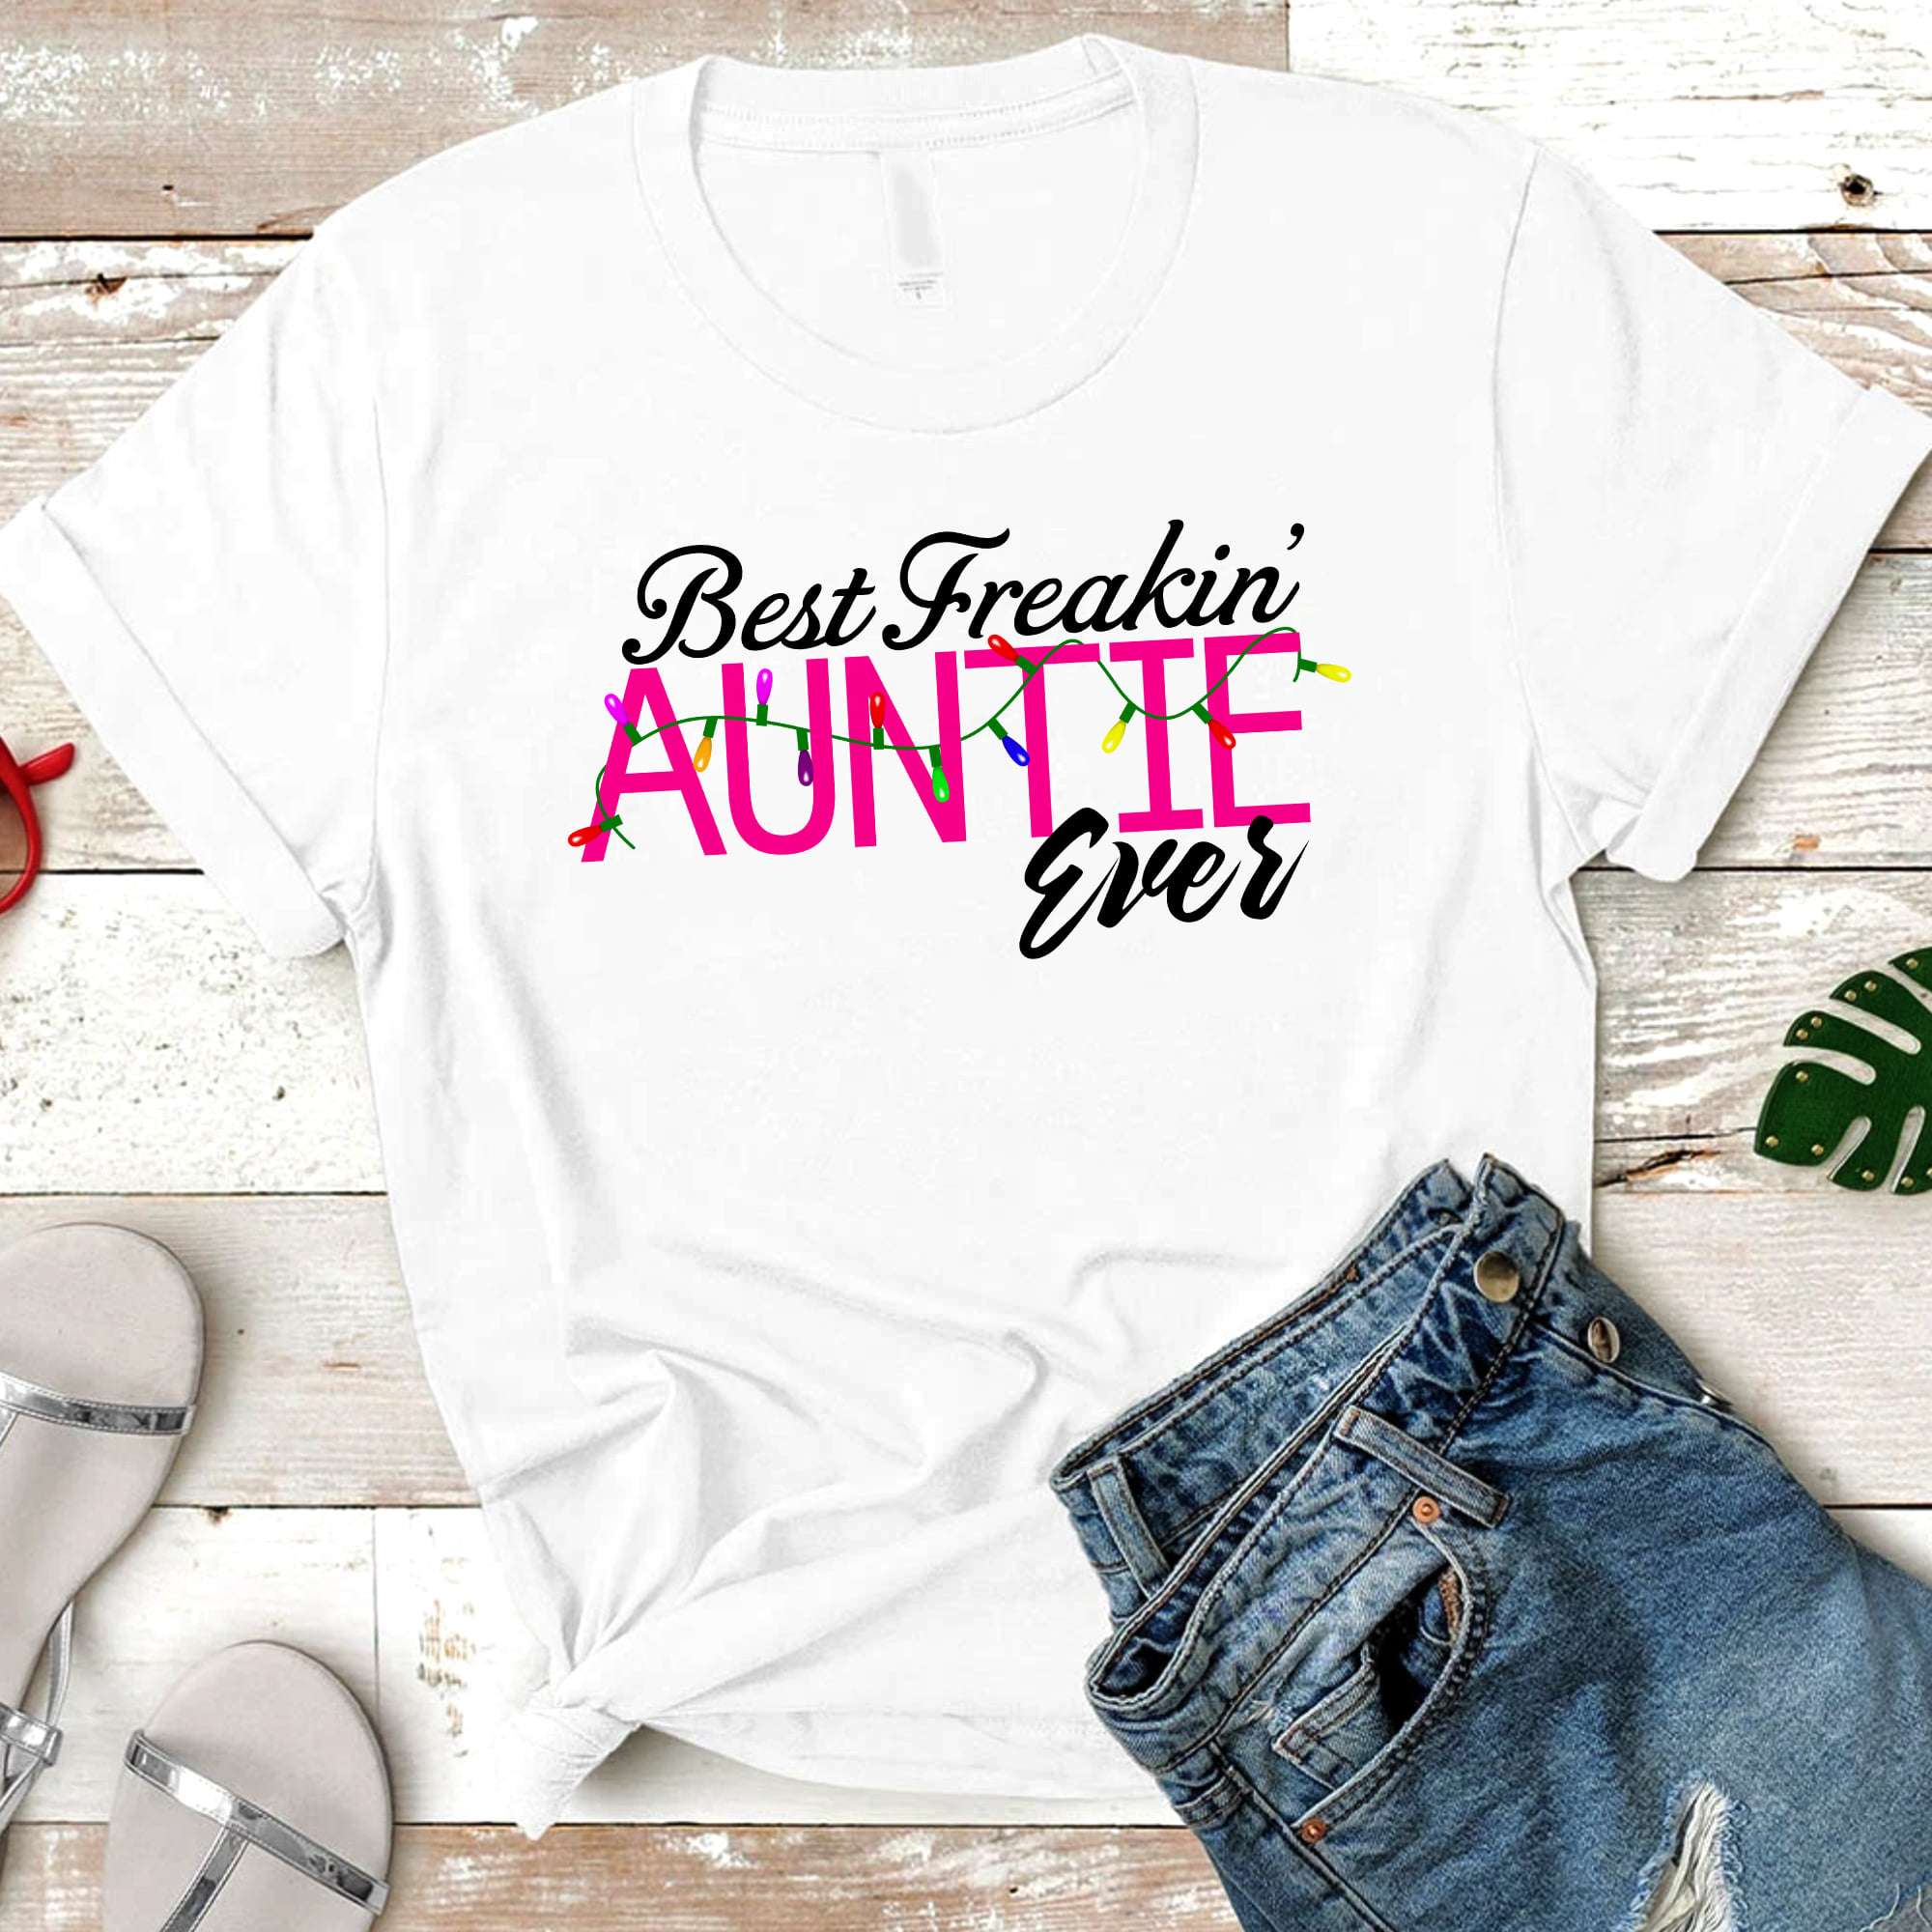 Best freakin auntie ever - Love being auntie, auntie loves family